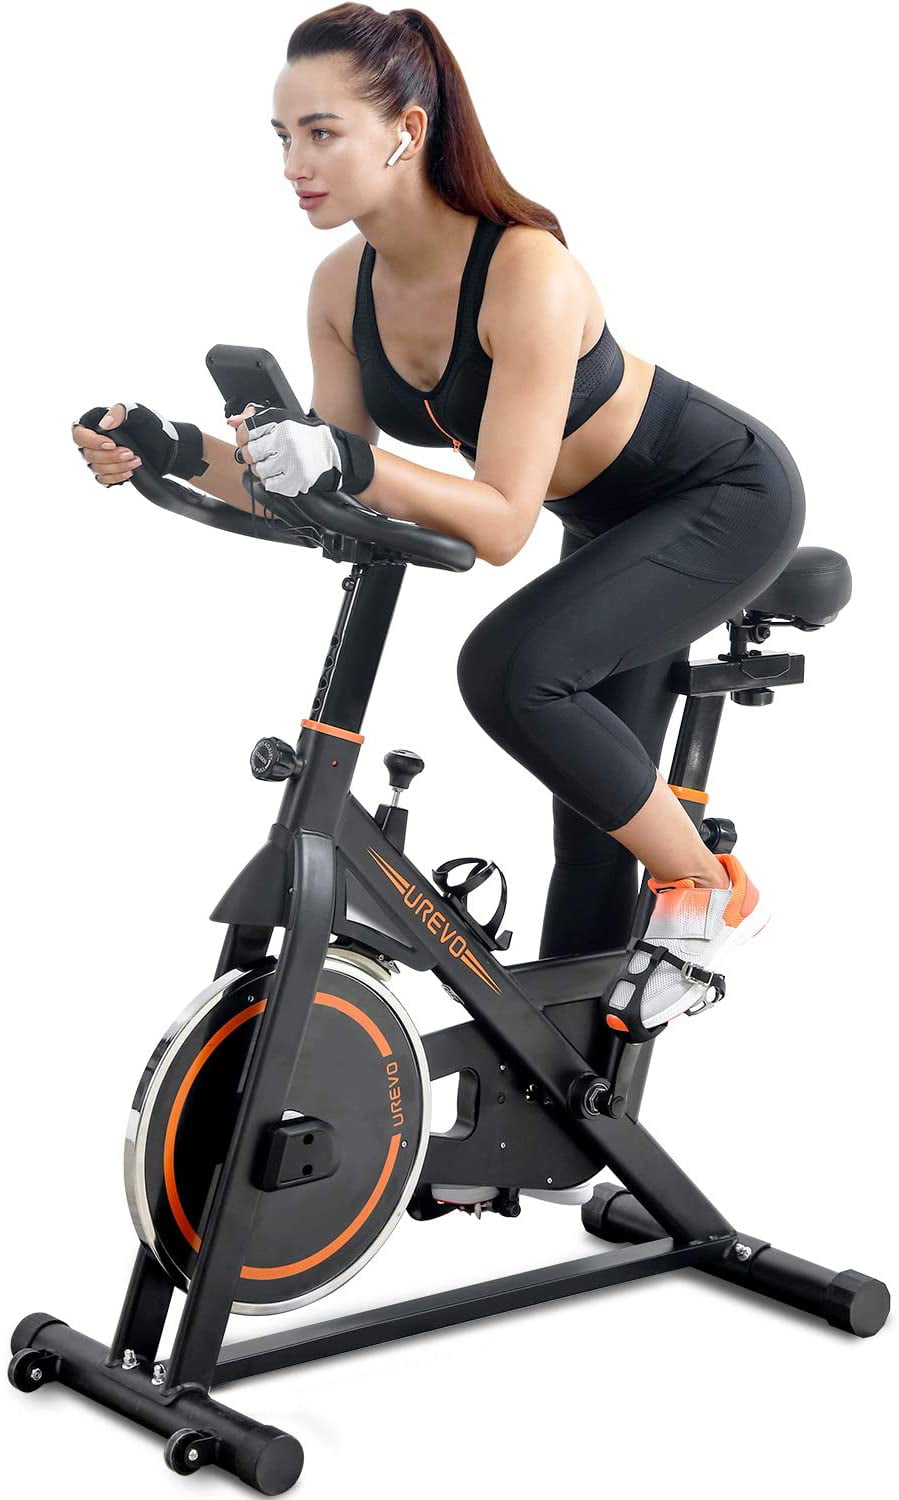 10kg Flywheel Indoor Cycling Bike for Home Use Wo UREVO Kardio E1 Exercise Bike 